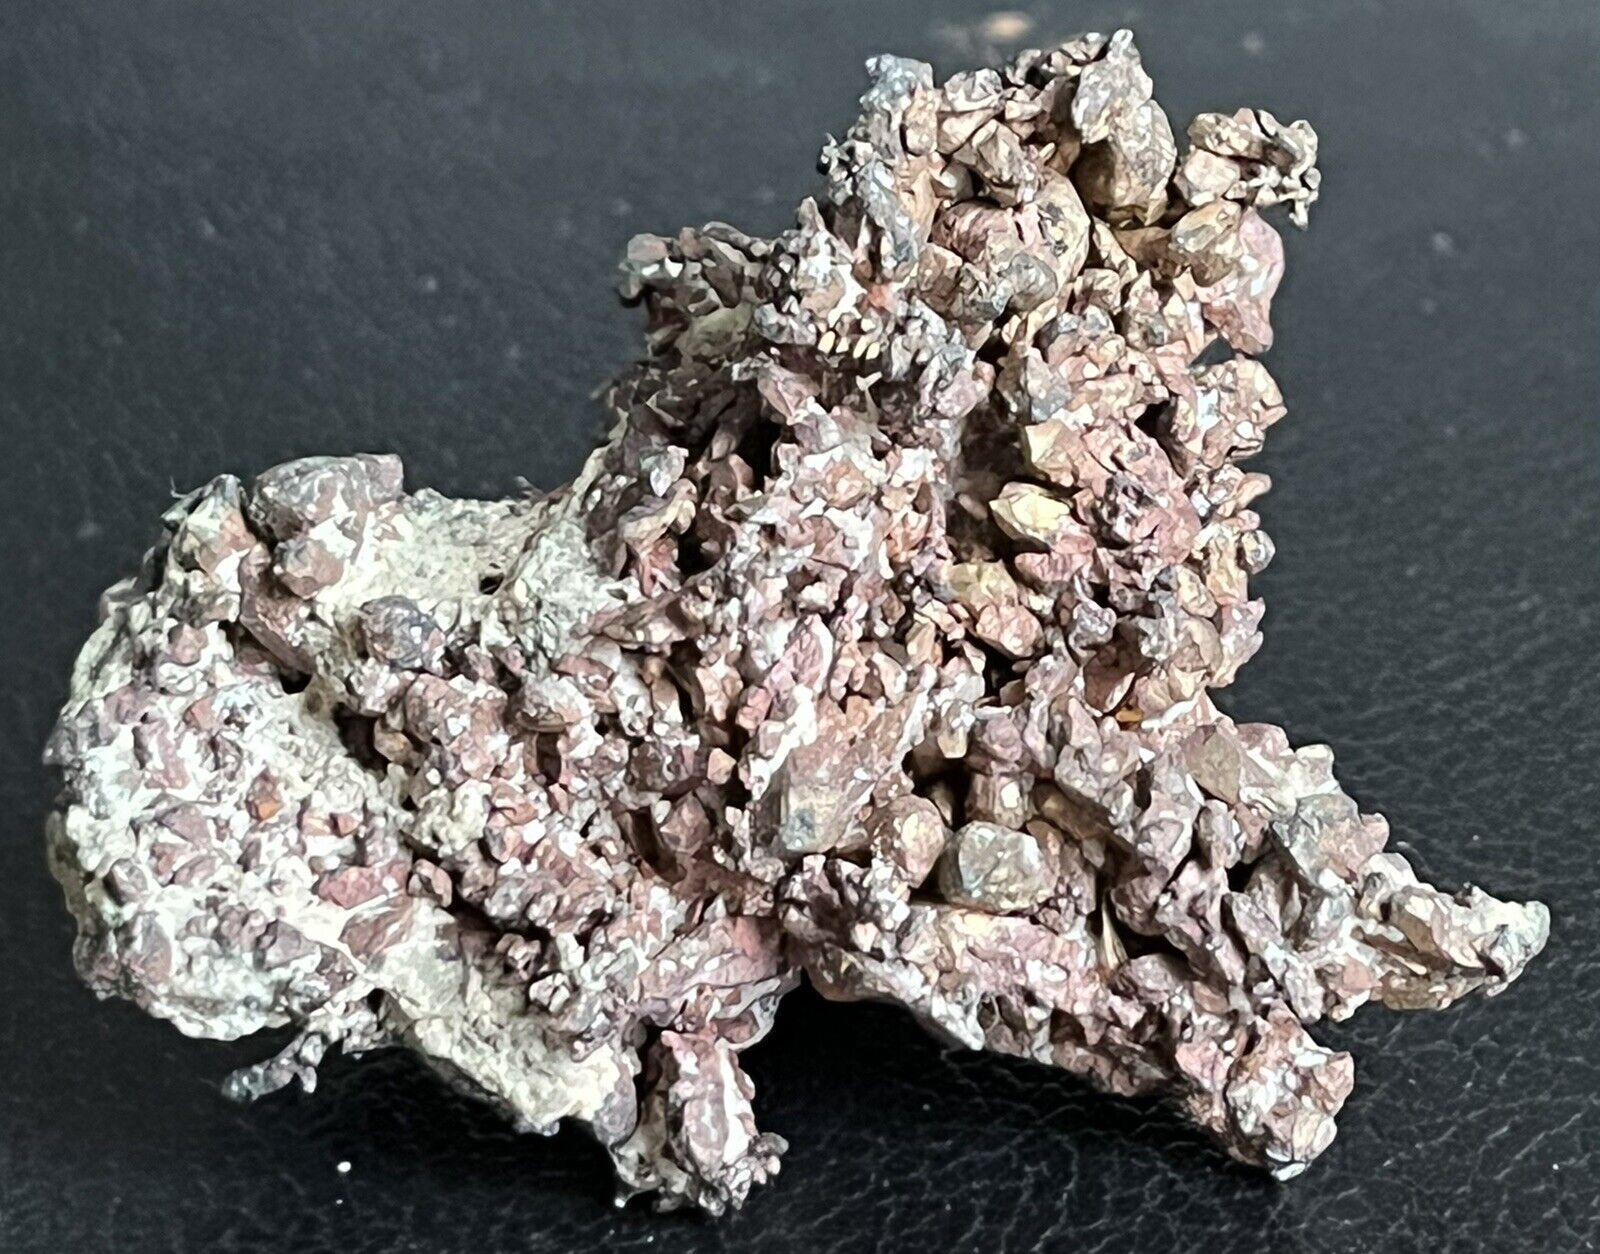 6cm Nice Copper Crystal Group w Green Matrix - Mass Mine, Ontonagon, Michigan